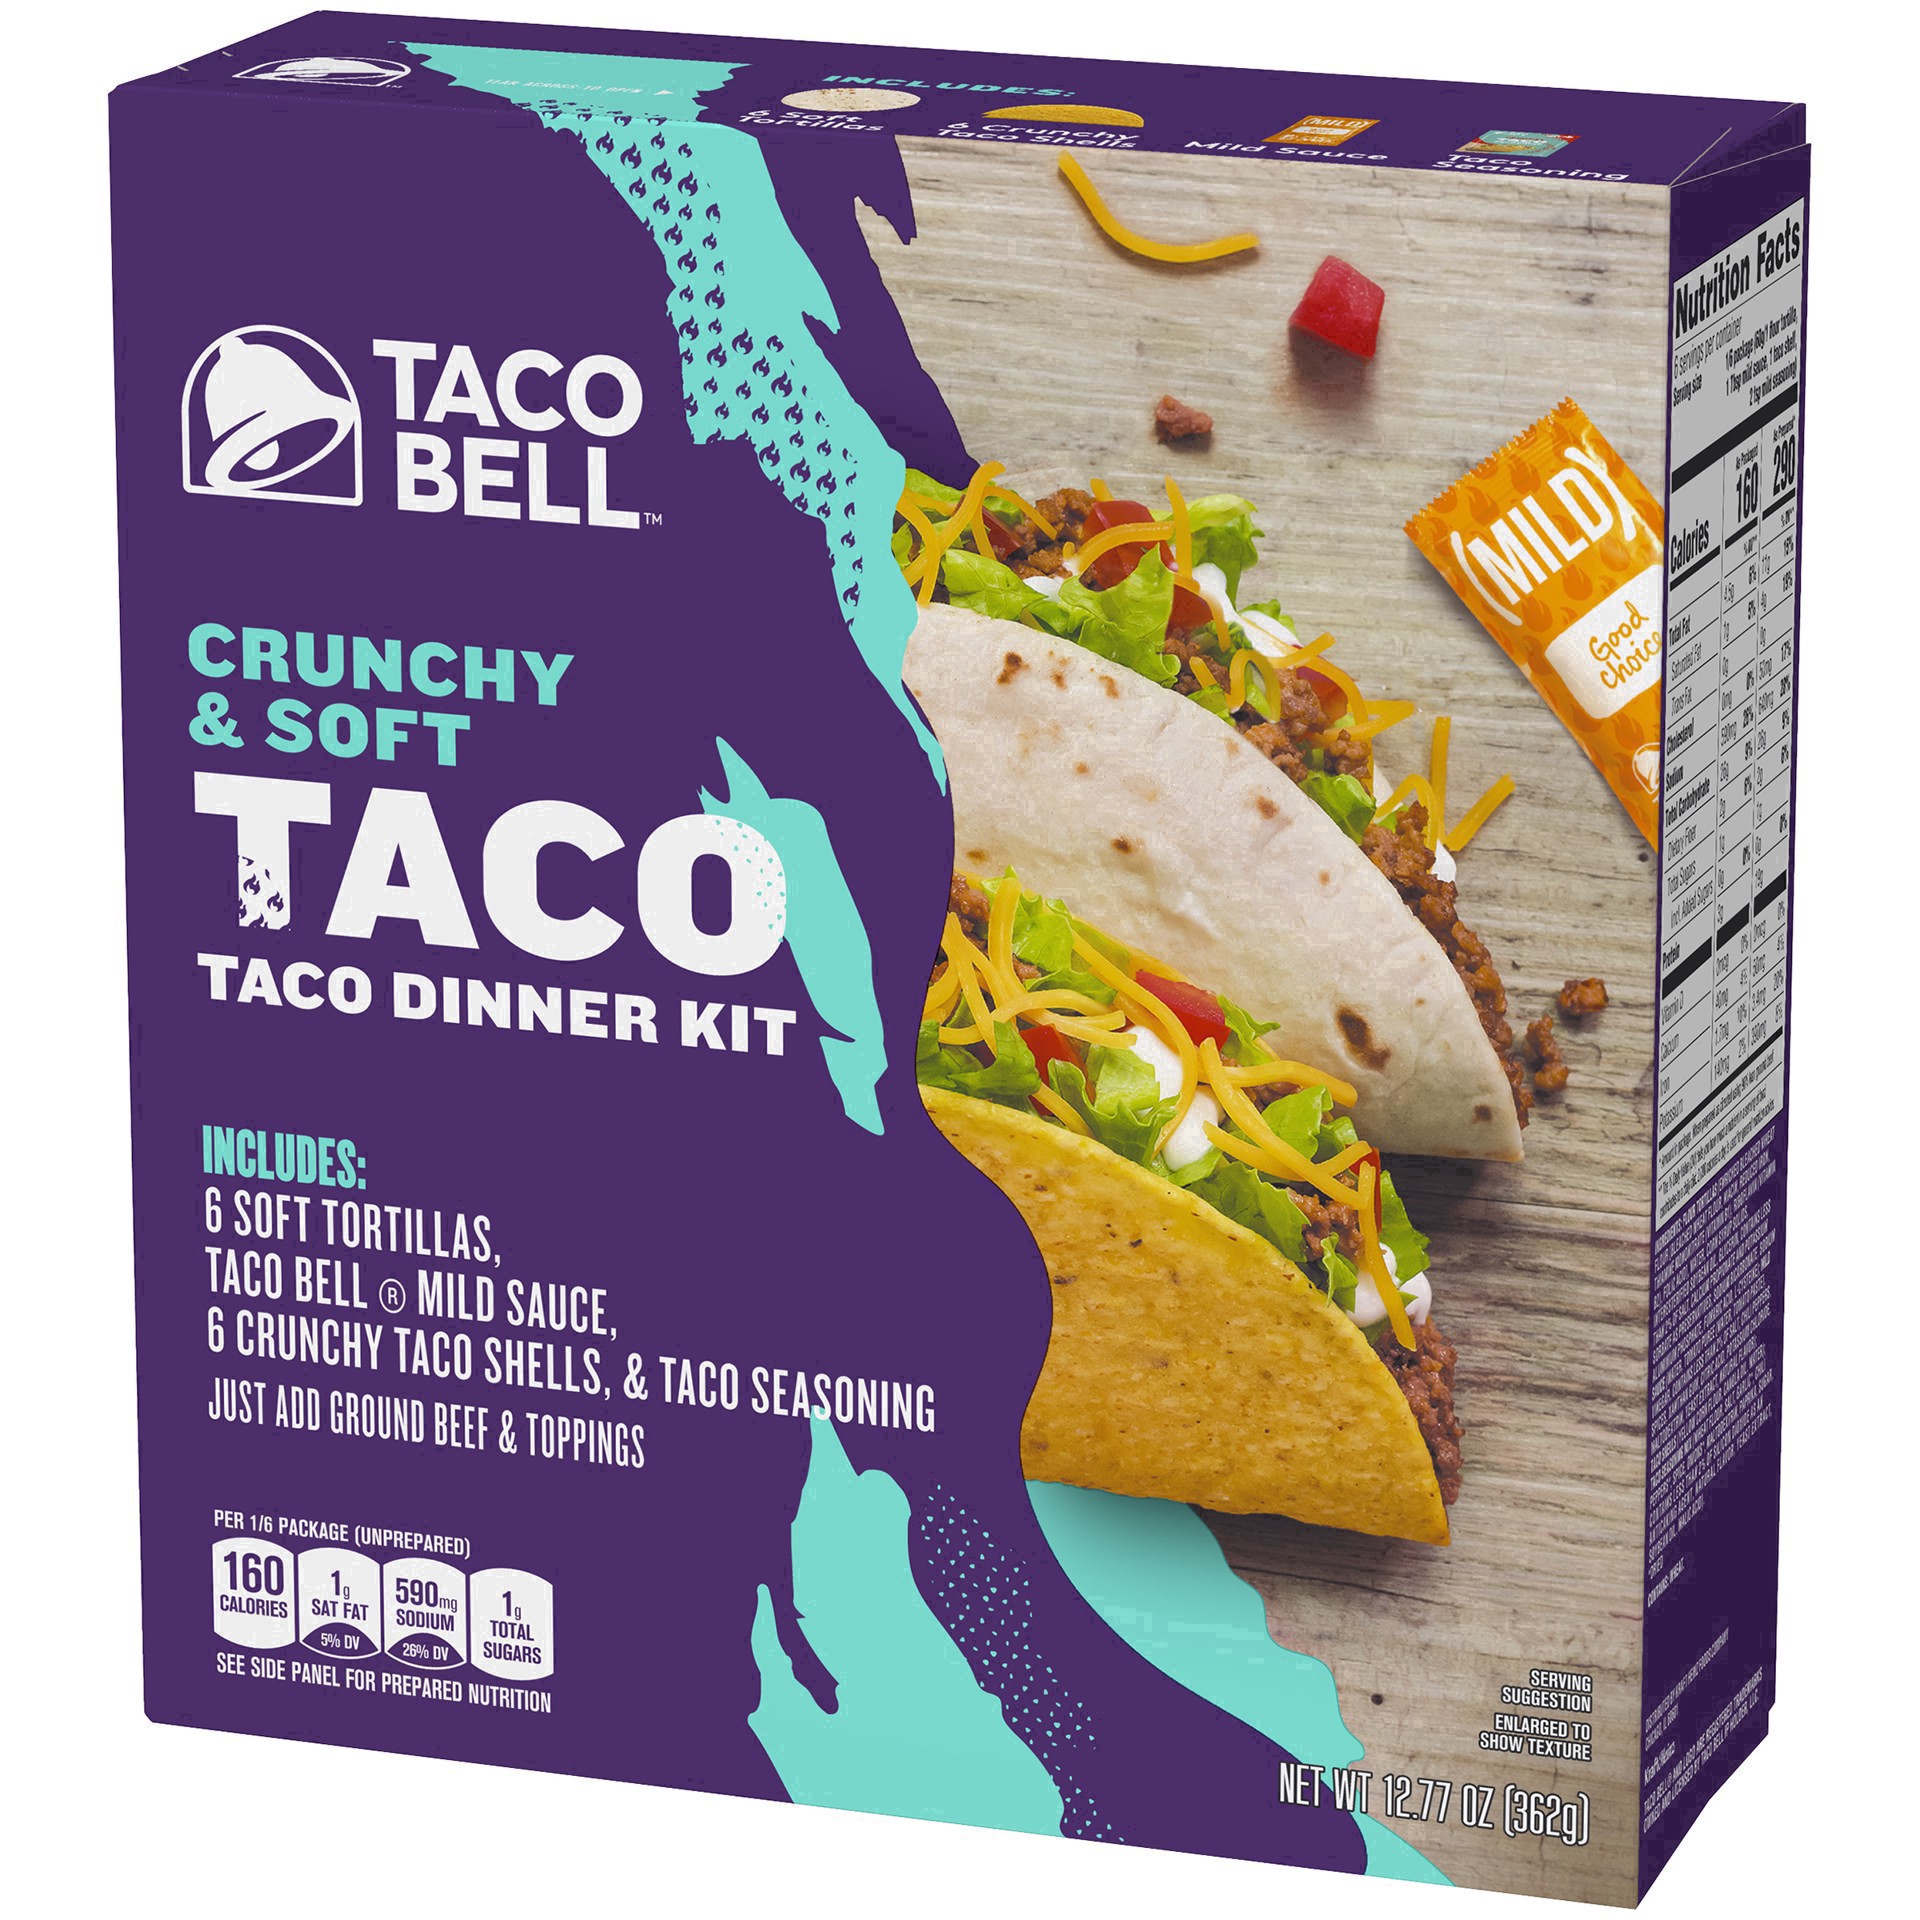 slide 78 of 101, Taco Bell Crunchy & Soft Taco Cravings Kit with 6 Soft Tortillas, 6 Crunchy Taco Shells, Taco Bell Mild Sauce & Seasoning, 12.77 oz Box, 1 ct